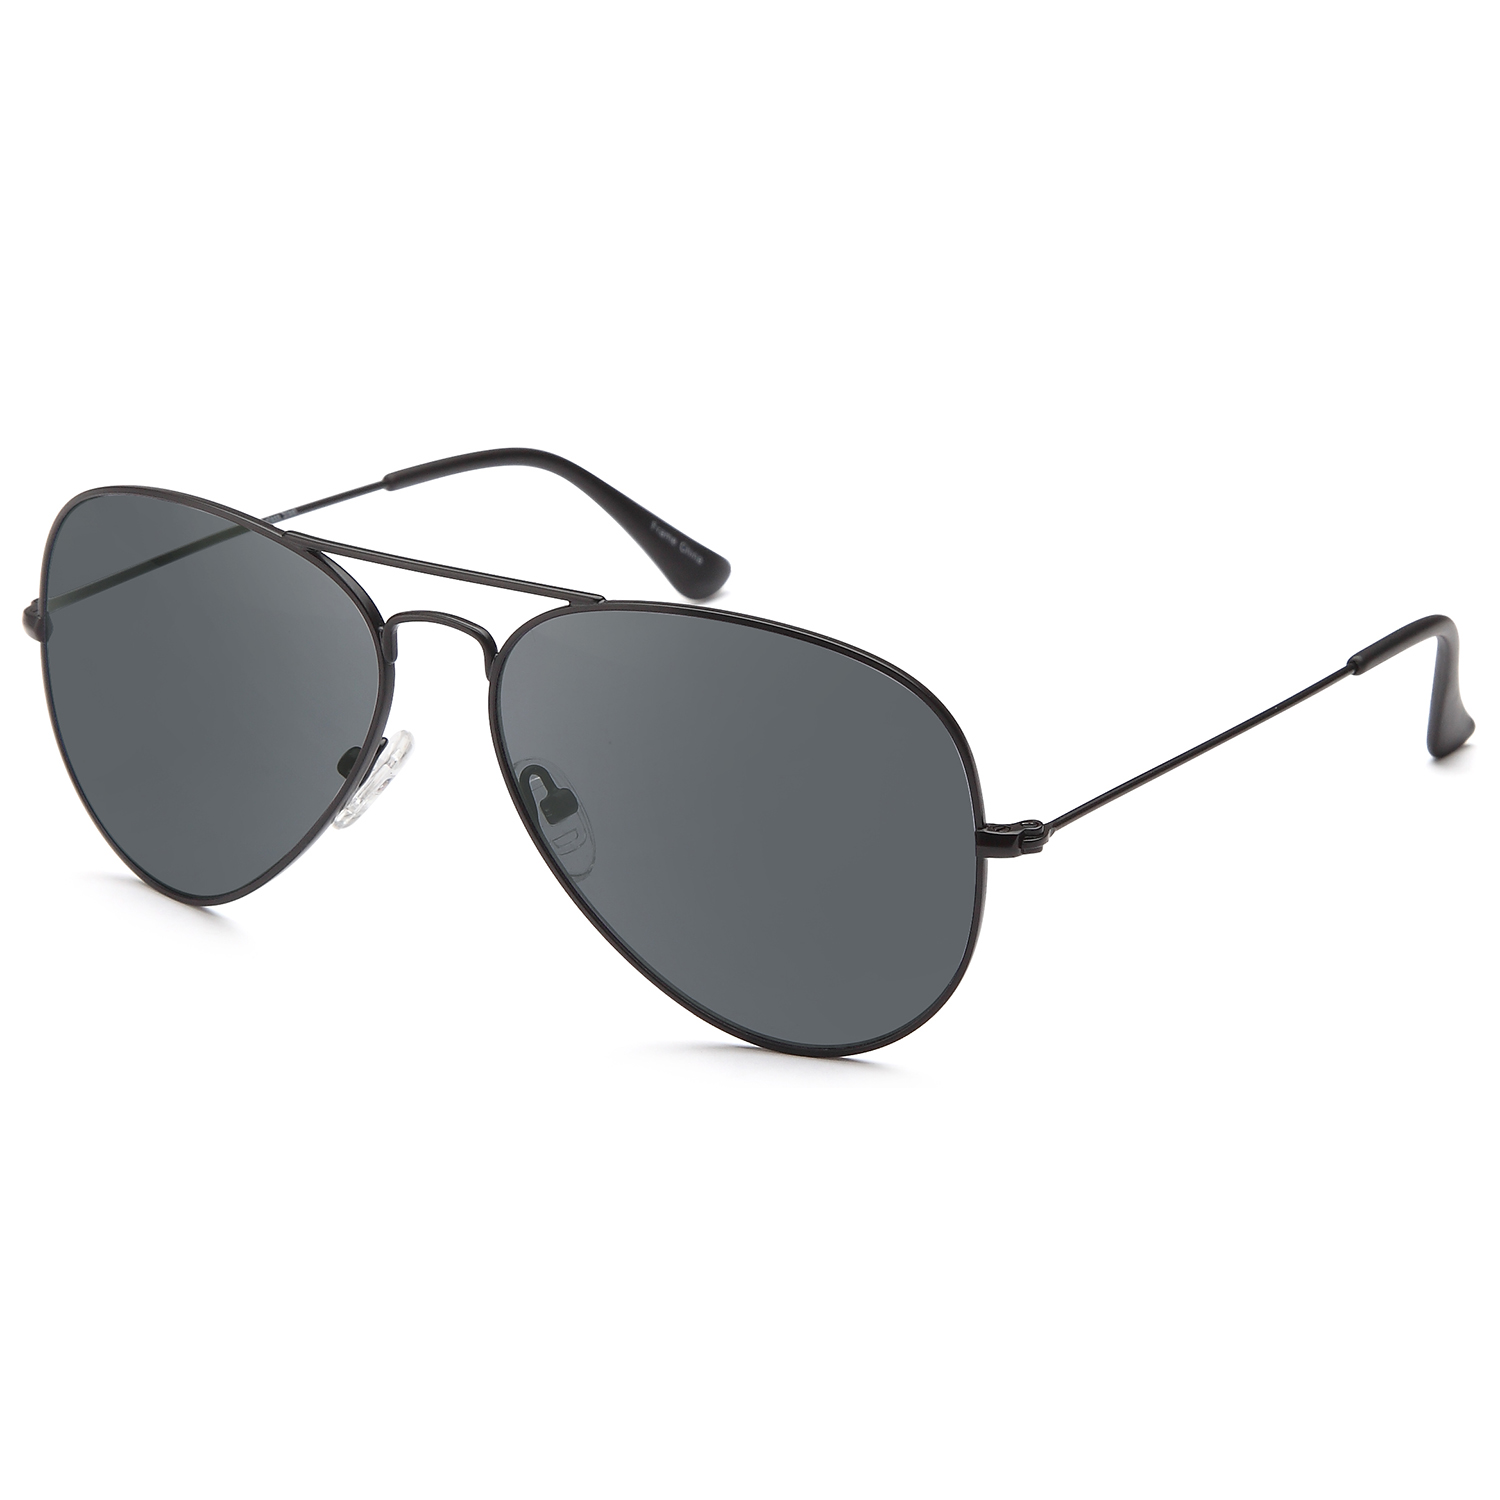 JETPAL Premium Classic Aviator Sunglasses w Flash Mirror and Polarized Lens Options UV400 (Non Polarized Grey Lens Black Frame) - image 2 of 2